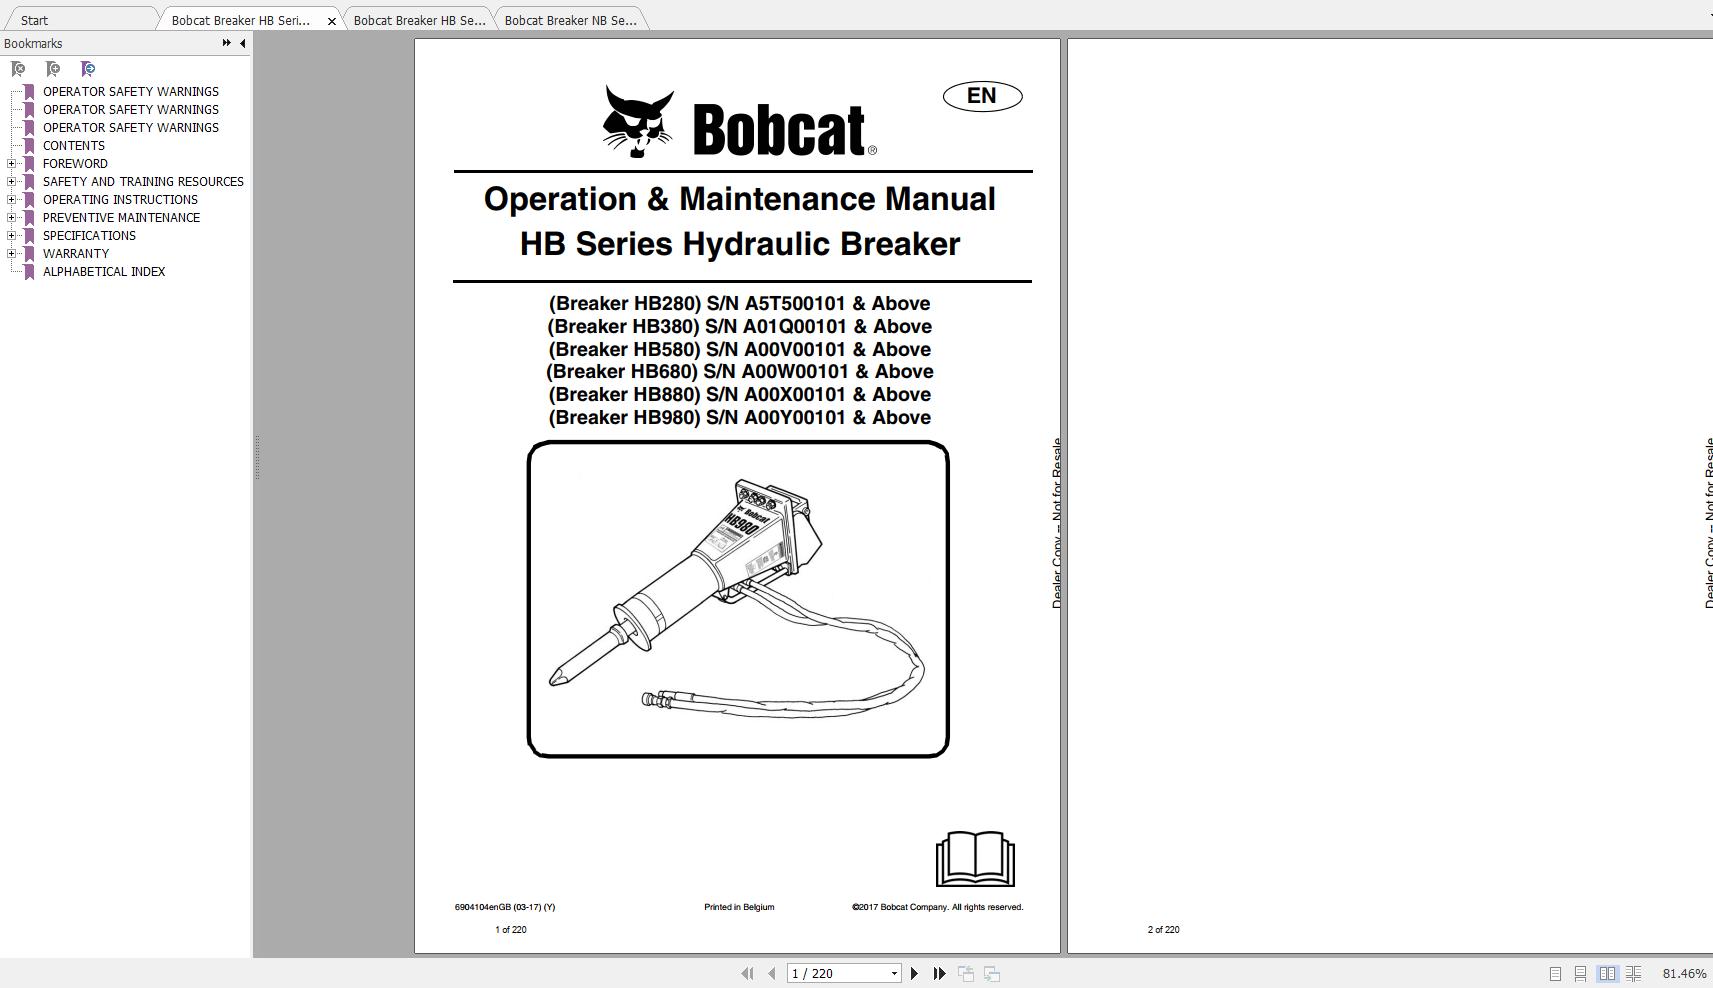 Bobcat Hydraulic Breaker HB Series Operation & Maintenance Manuals ...